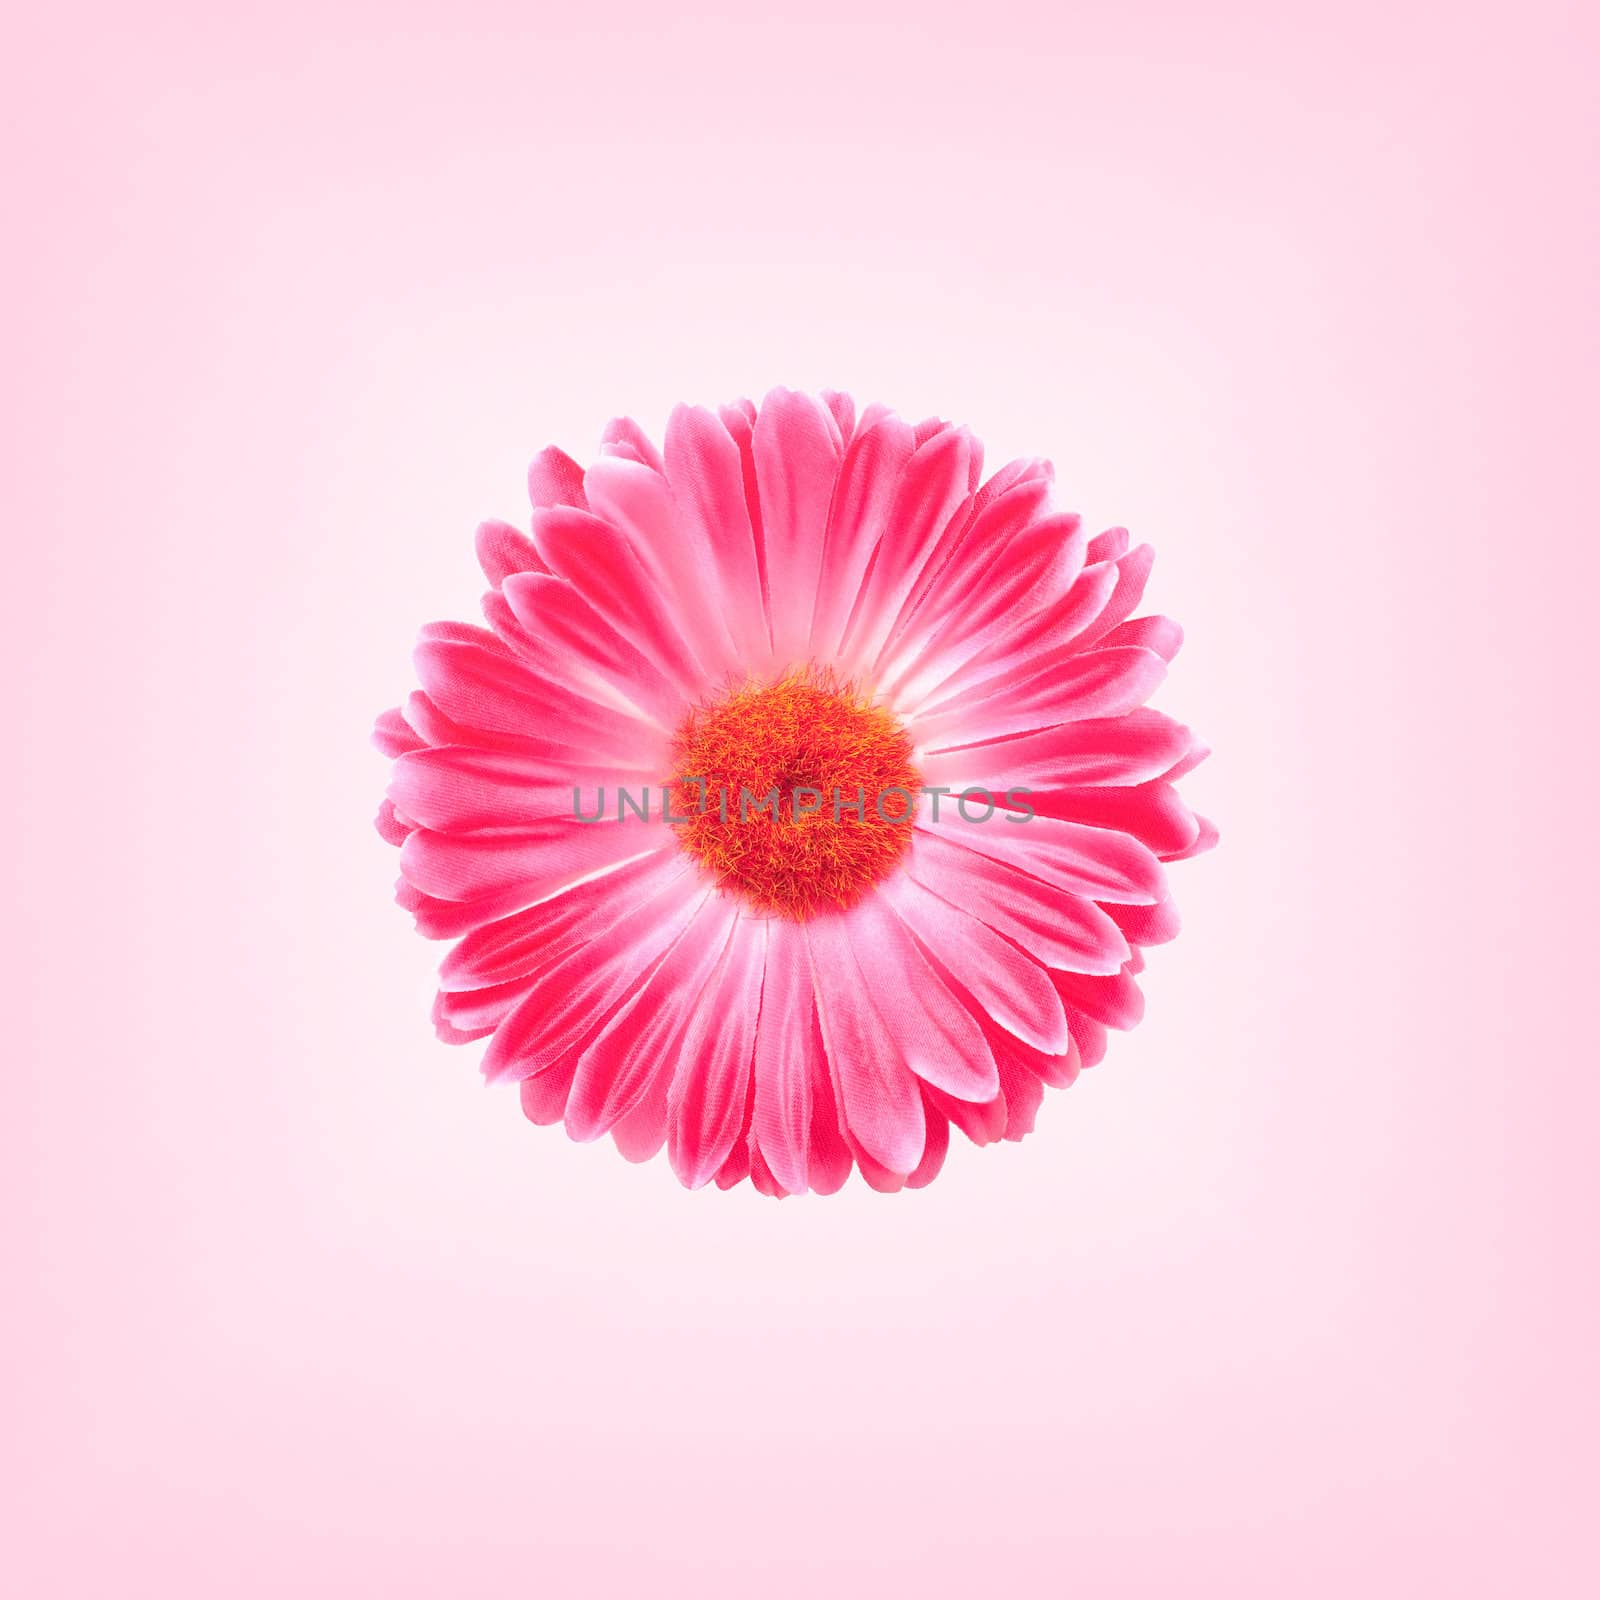  Pink Gerbera Flower On A Pink Background